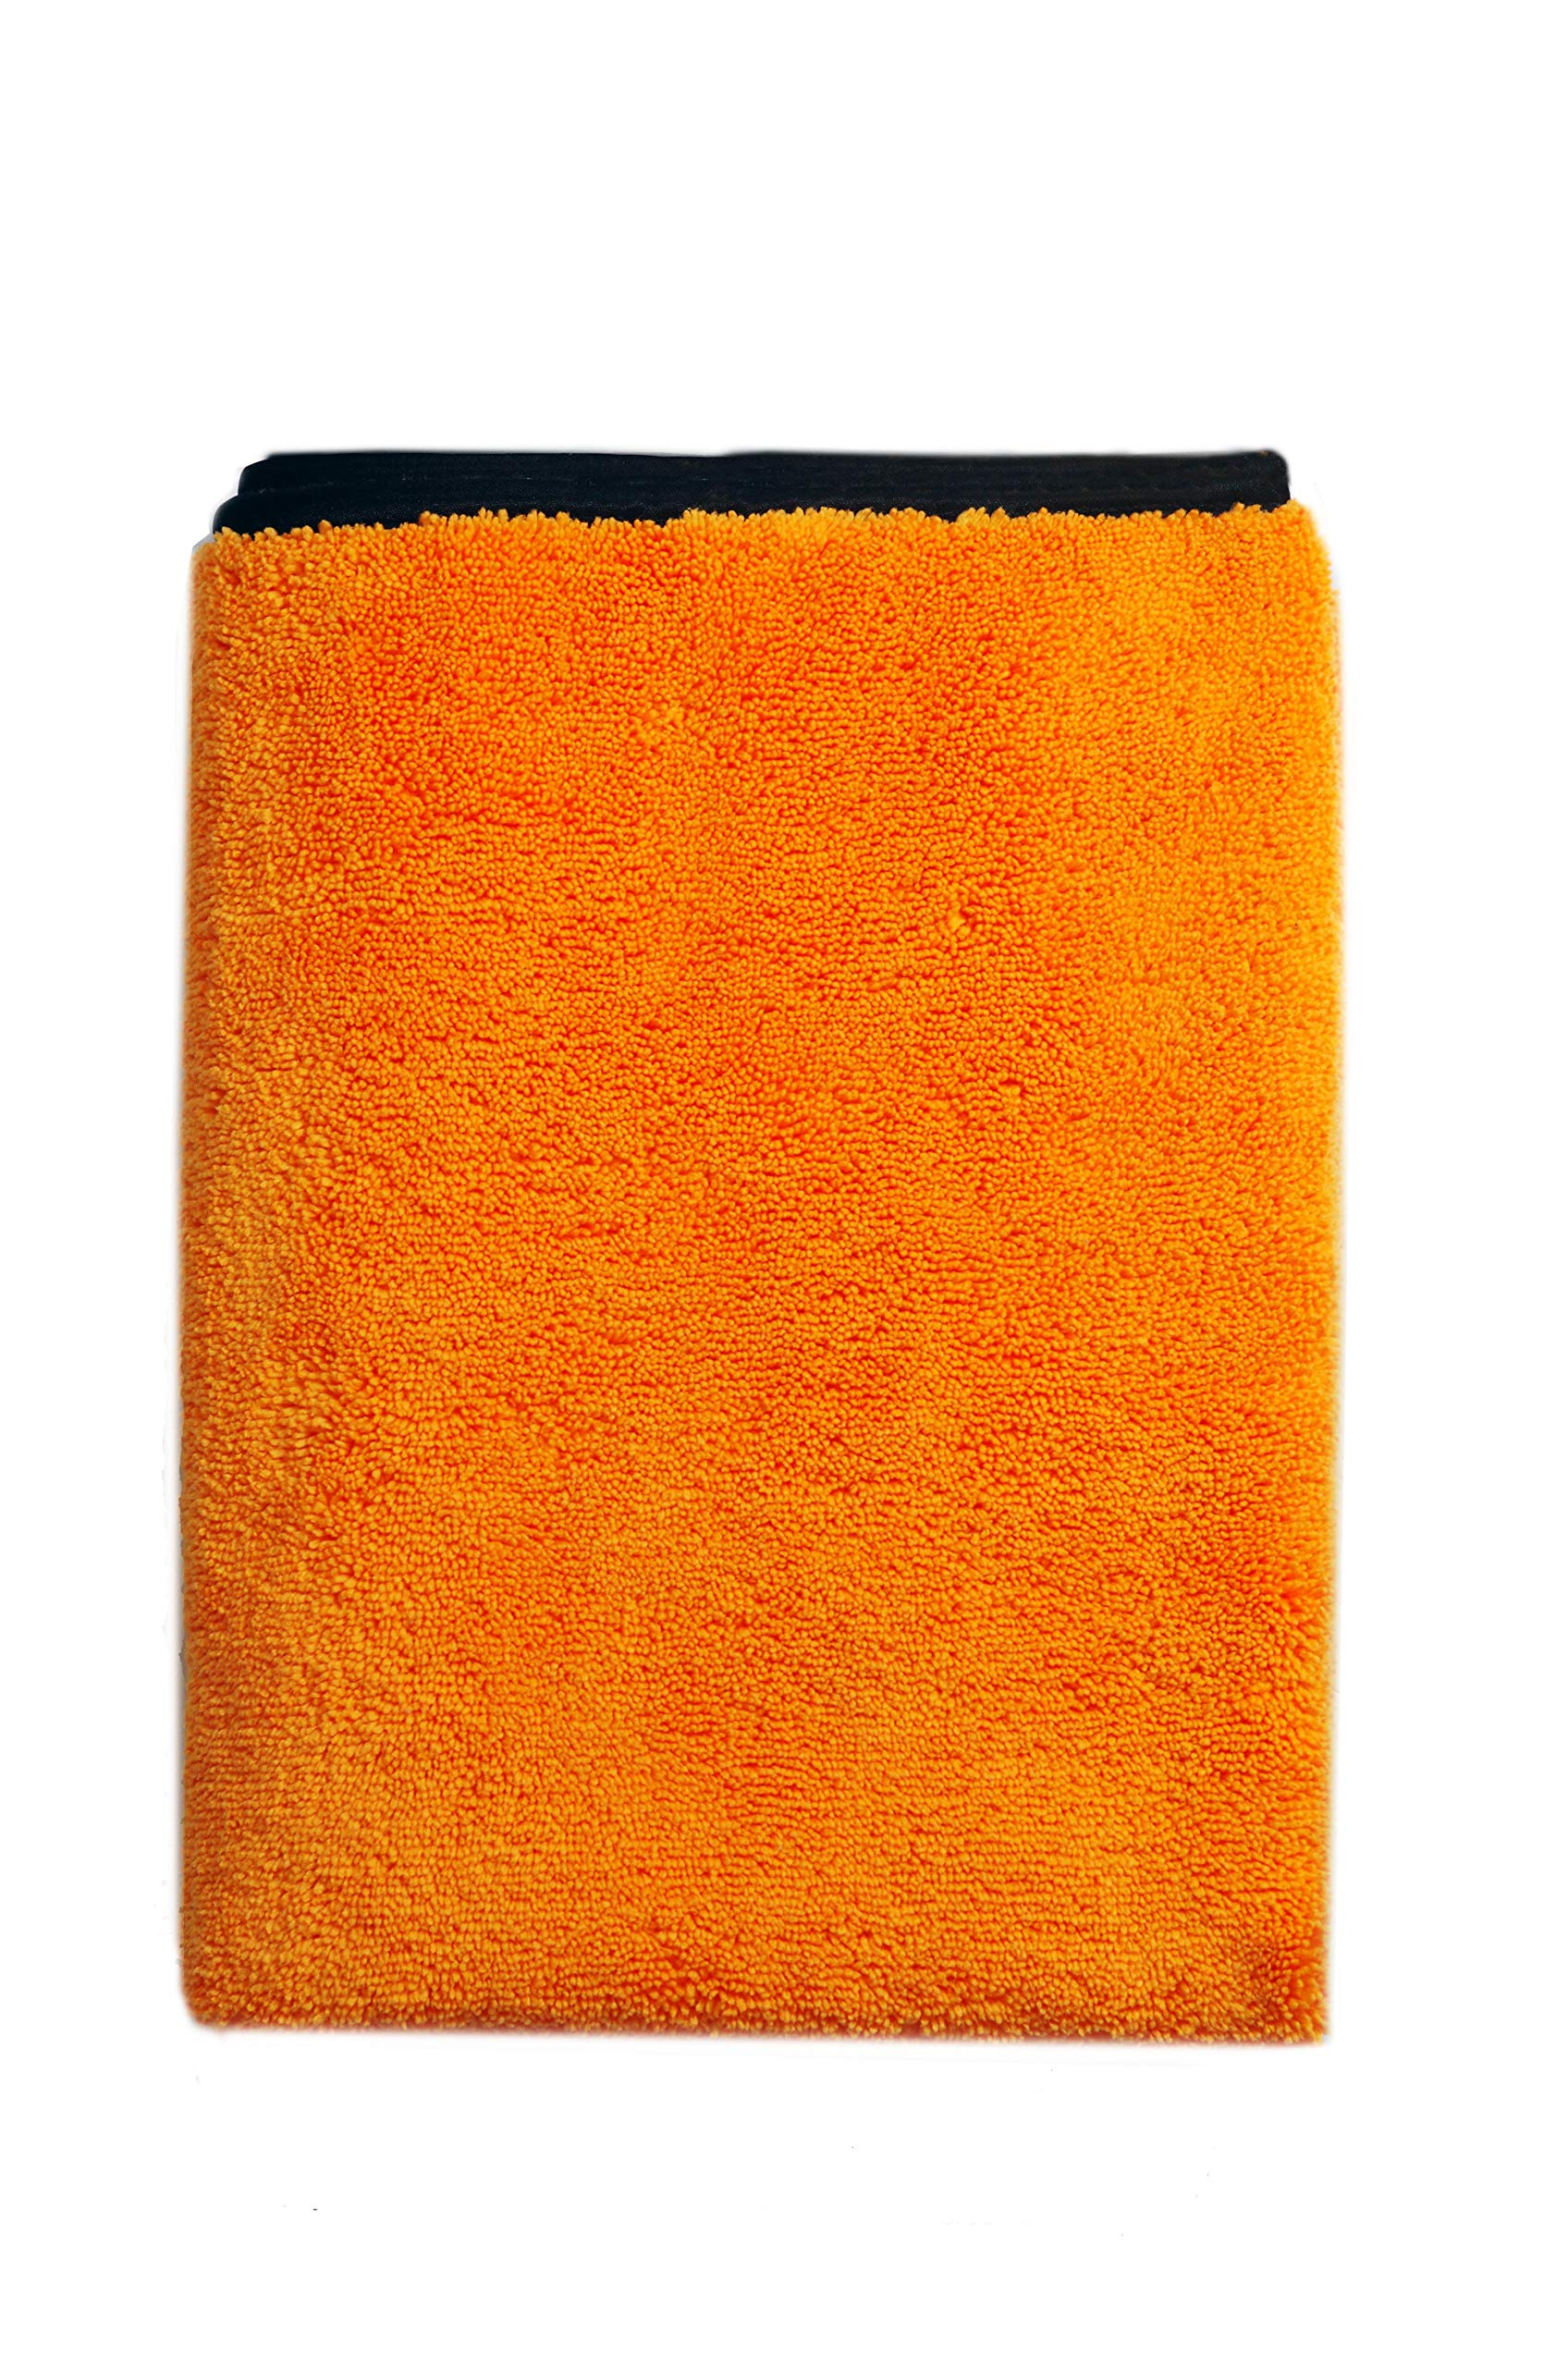 vente chaude Glart H44WG serviette de séchage en microfibre extrêmement absorbante 60x90 cm, orange, 1 pièce SxS2wyF1G en ligne